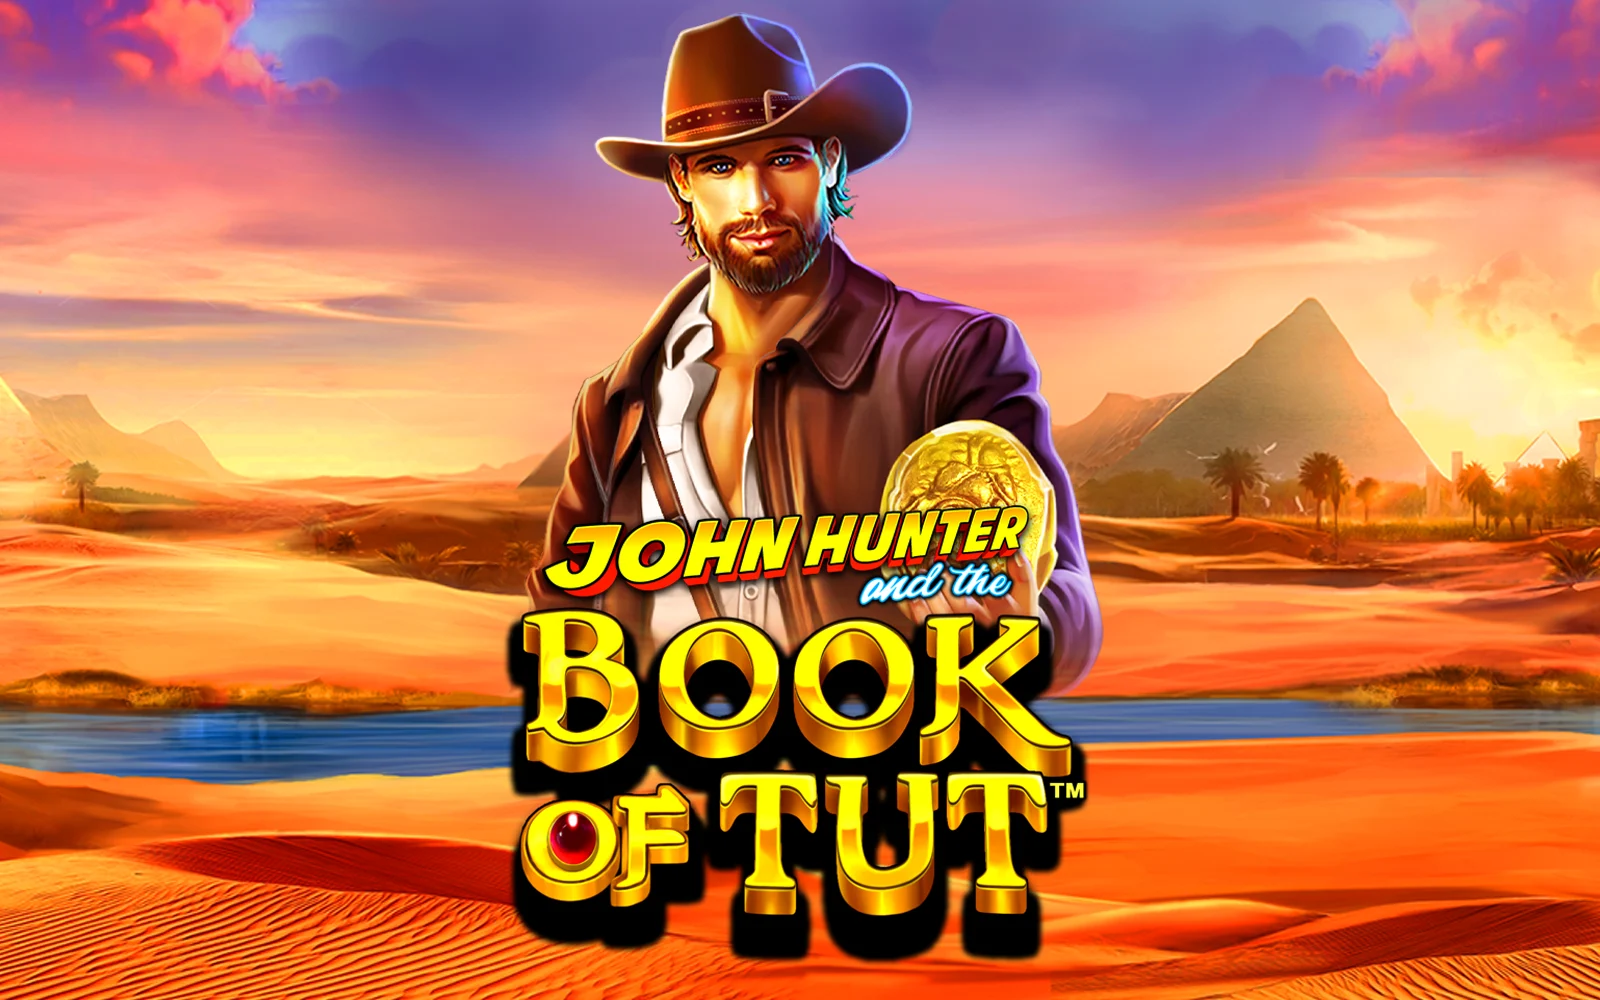 Грайте у John Hunter and the Book of Tut™ в онлайн-казино Starcasino.be